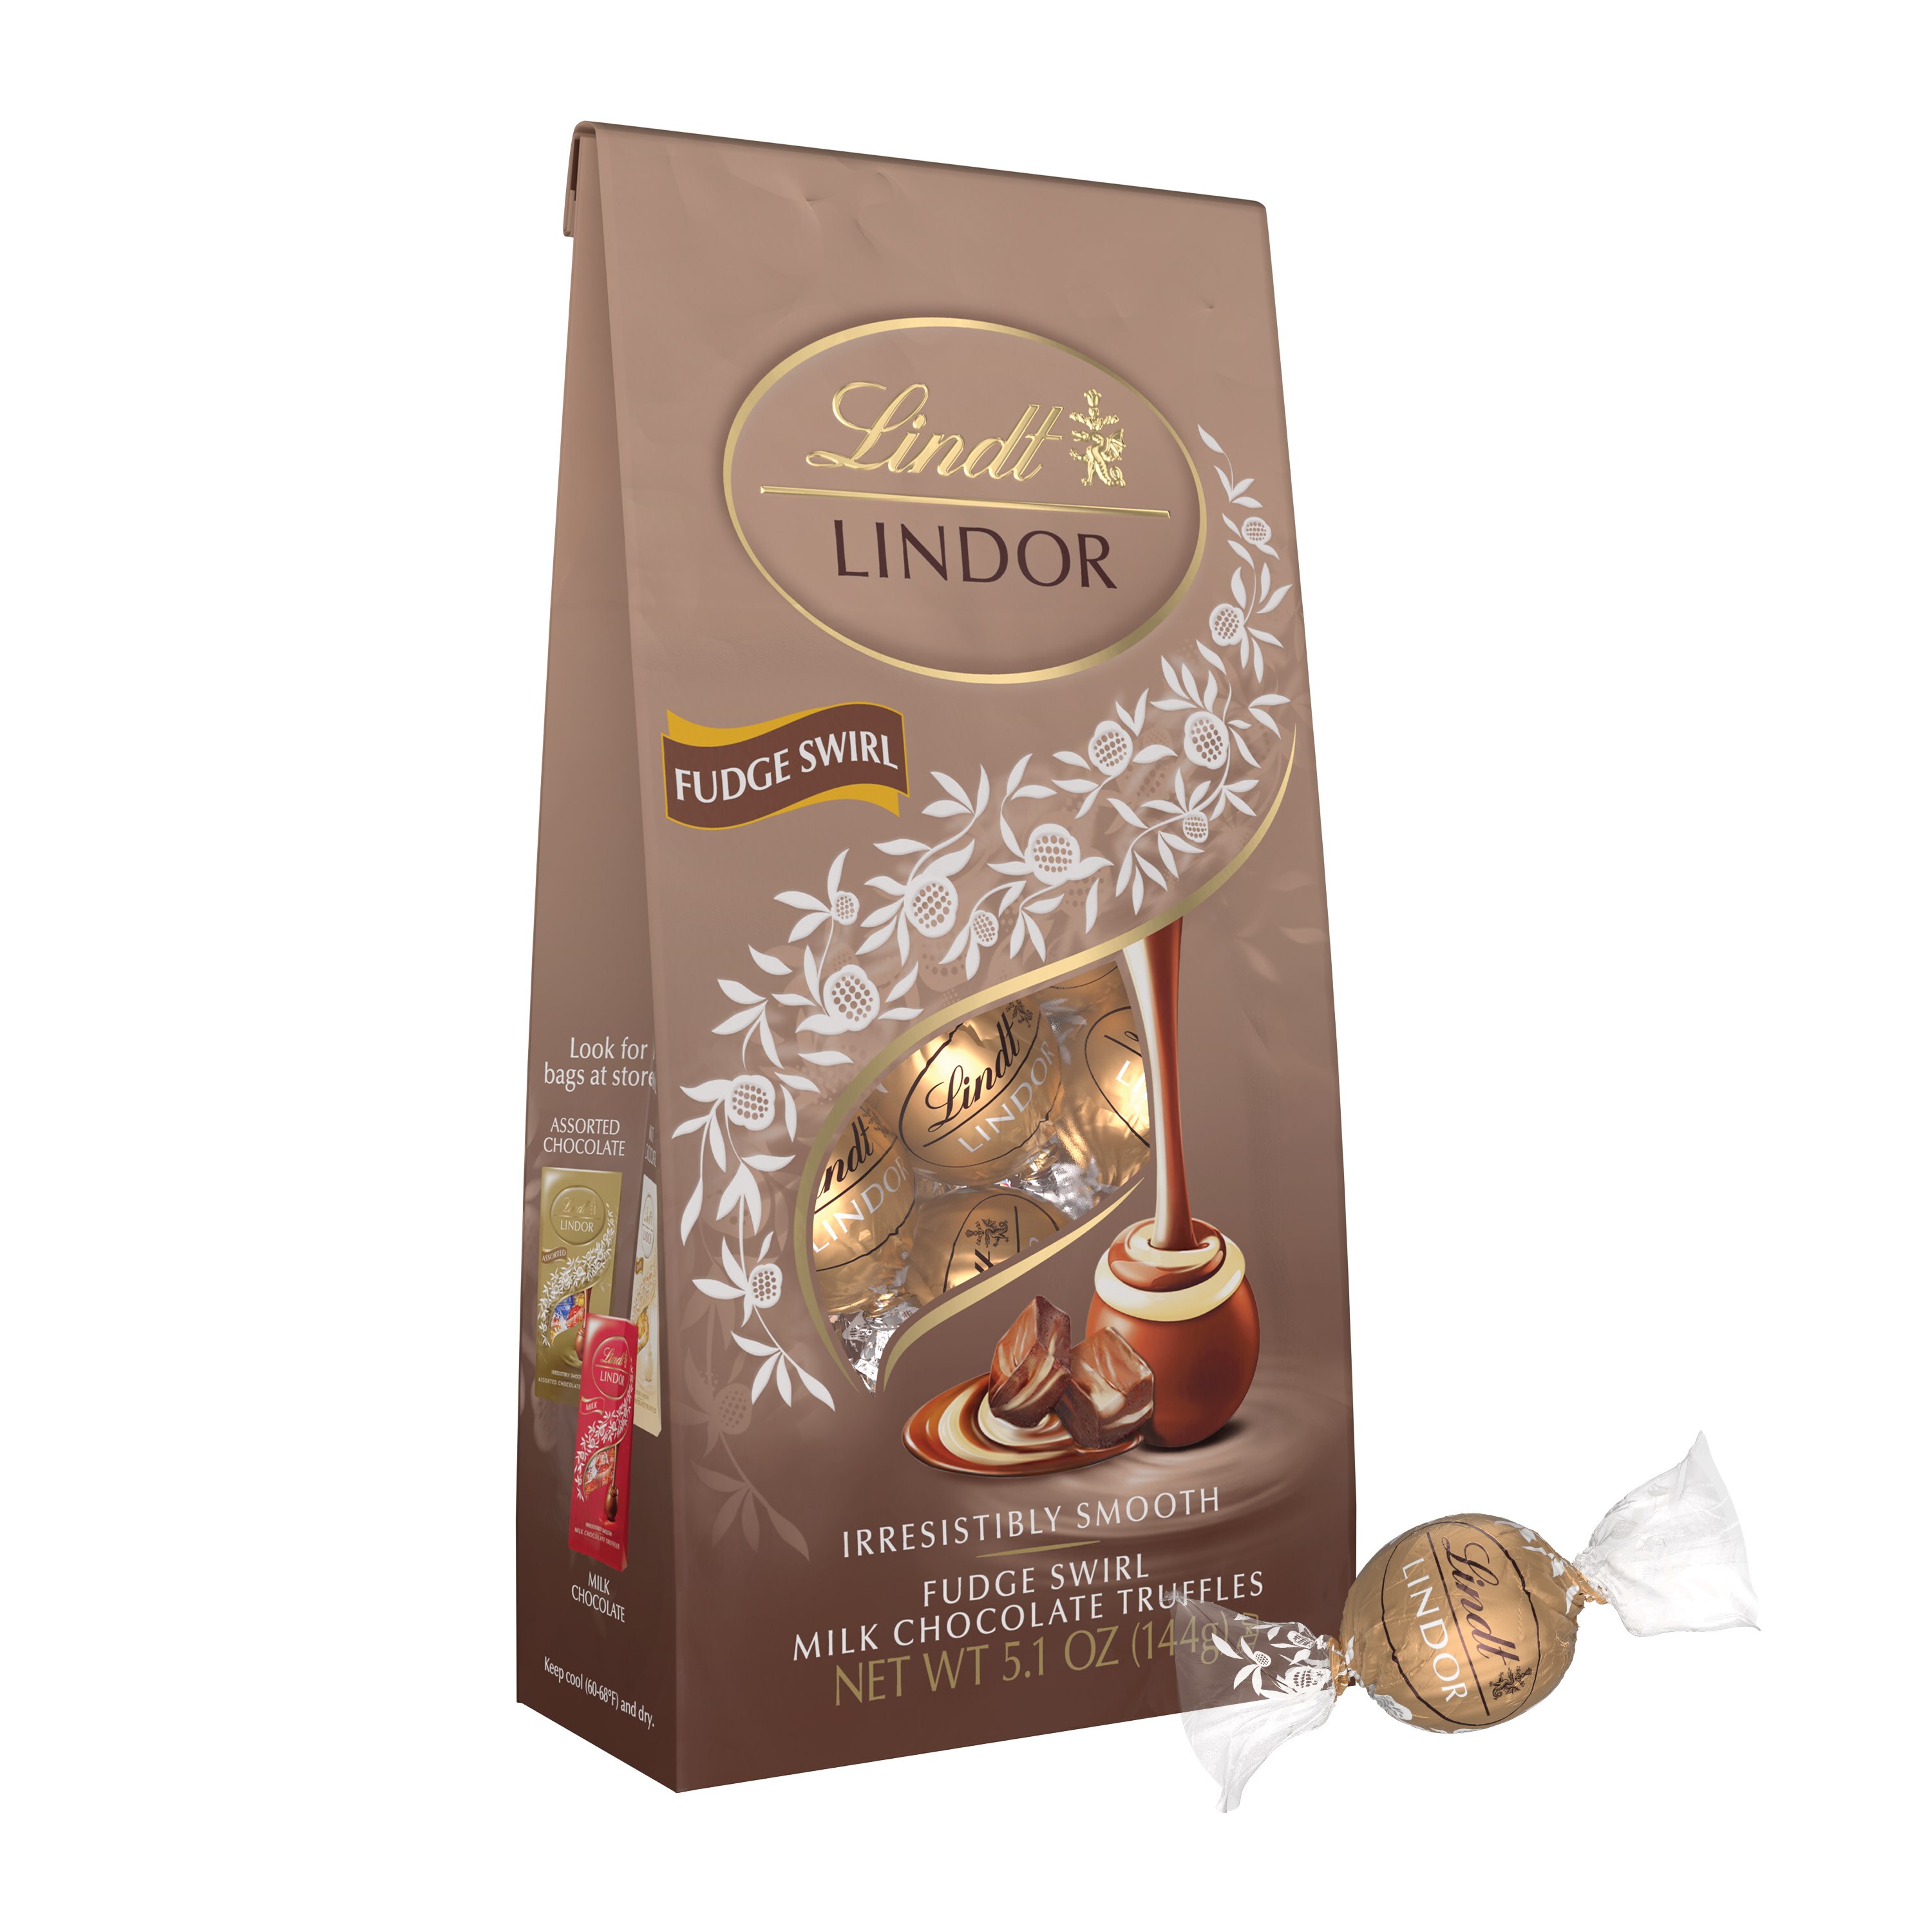 Lindt LINDOR Fudge Swirl Milk Chocolate Candy Truffles, Chocolates with Smooth, Melting Truffle Center, 5.1 oz. Bag